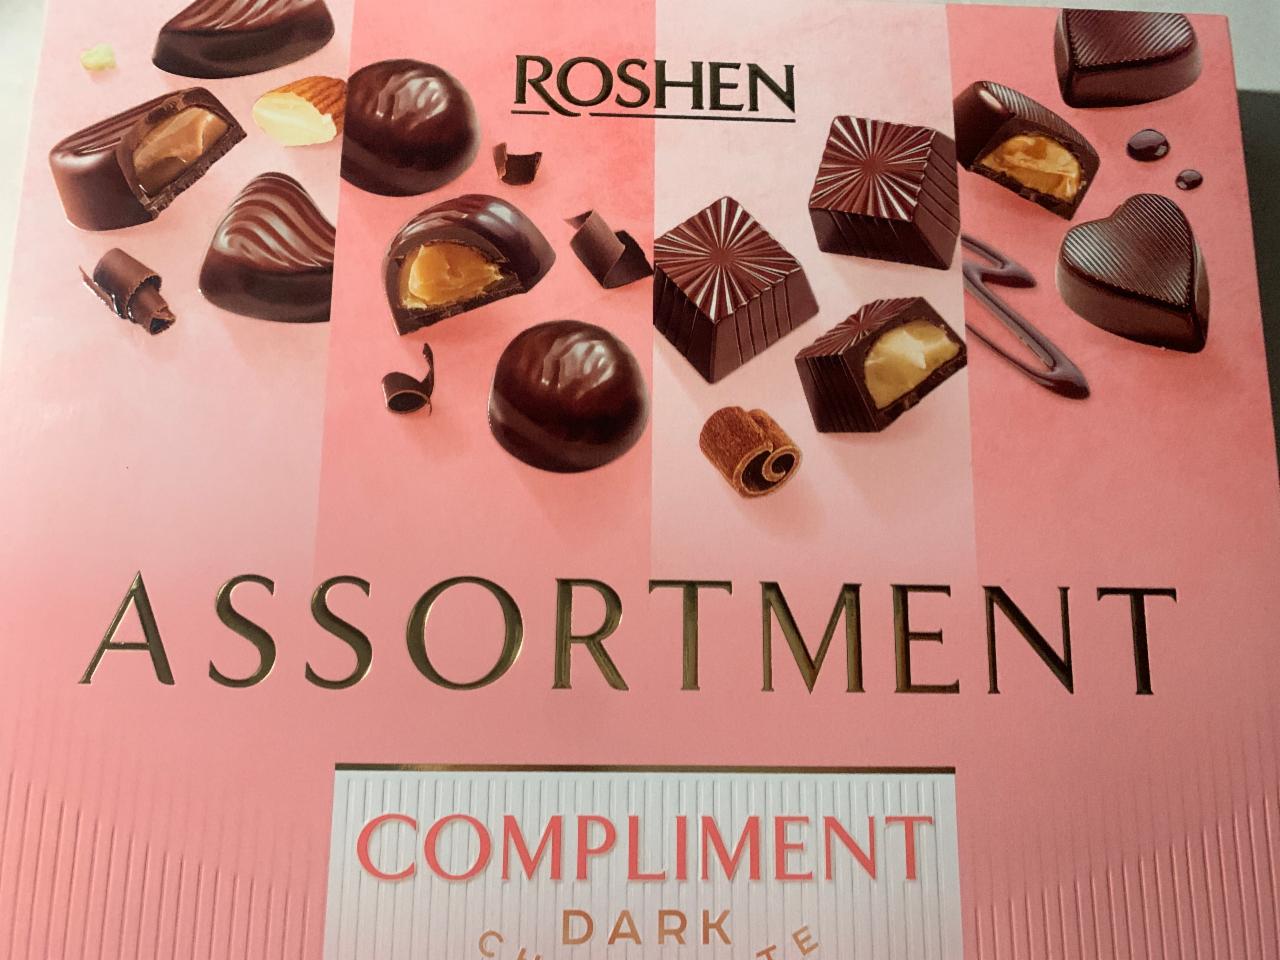 Képek - konfety-sompliment-dark-chocolate-roshen